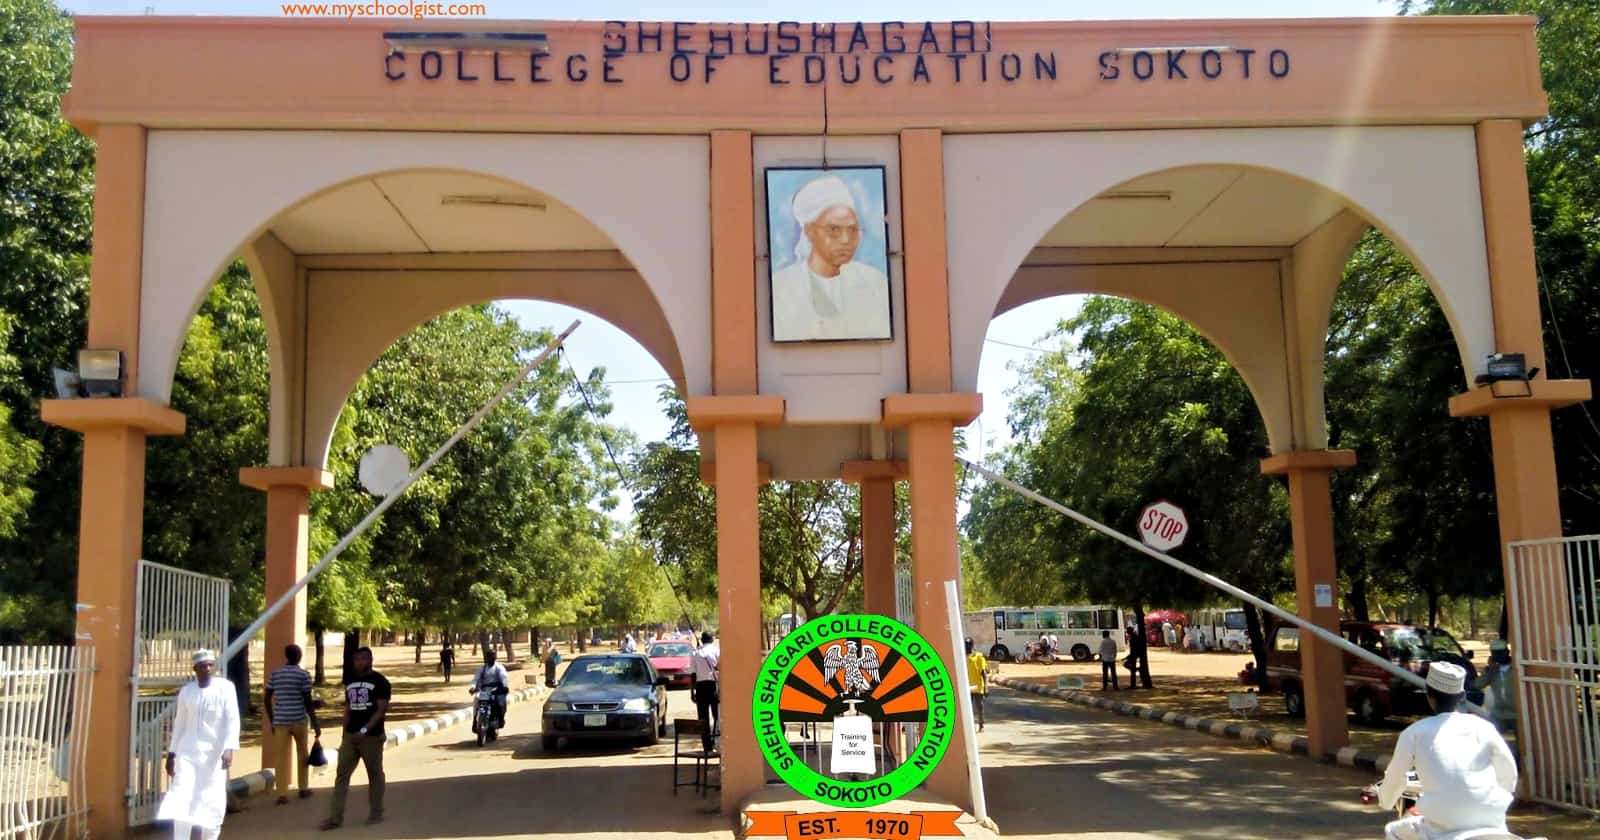 Shehu Shagari College of Education (SSCOE) Admission Form